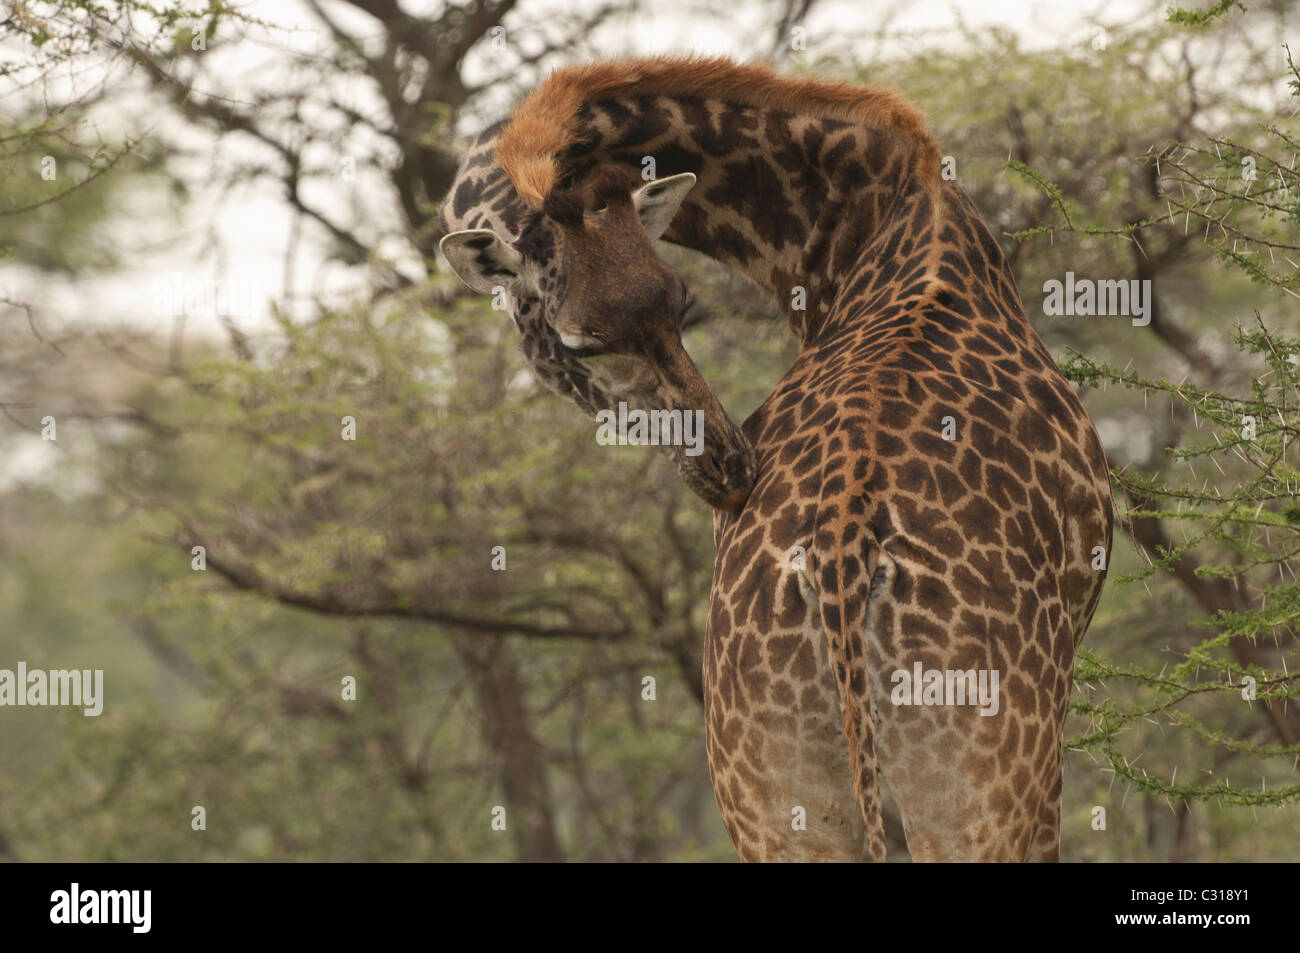 Stock photo of a masai giraffe reaching around to scratch his rump. Stock Photo